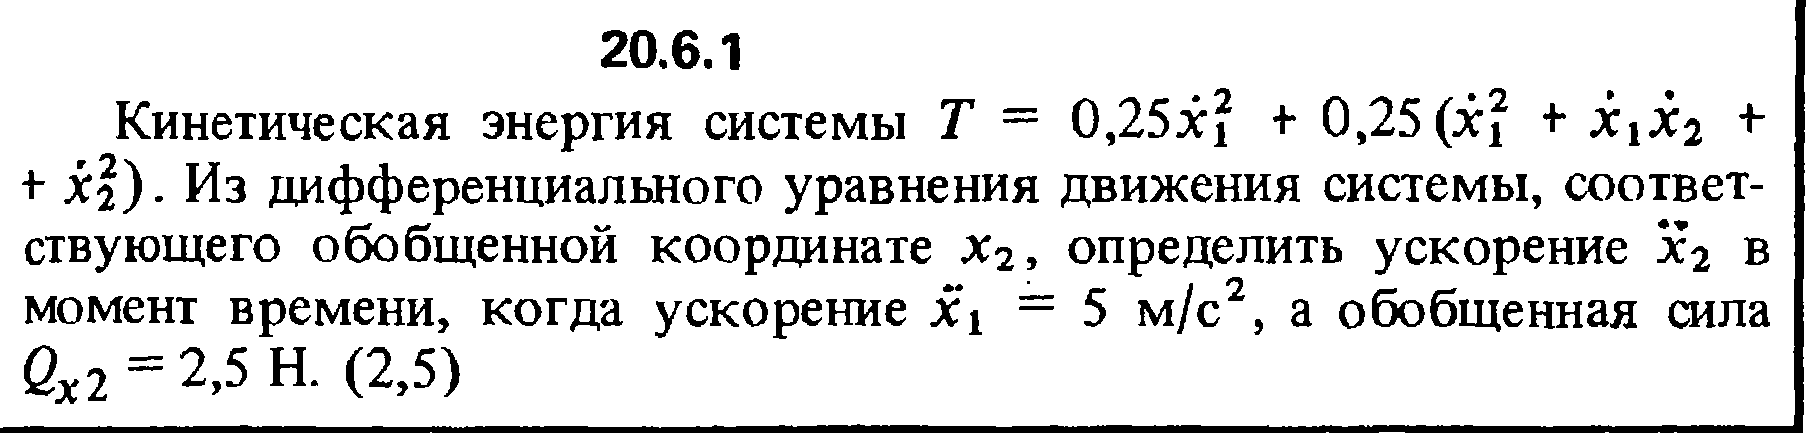 Решение 20.6.1 из сборника (решебника) Кепе О.Е. 1989